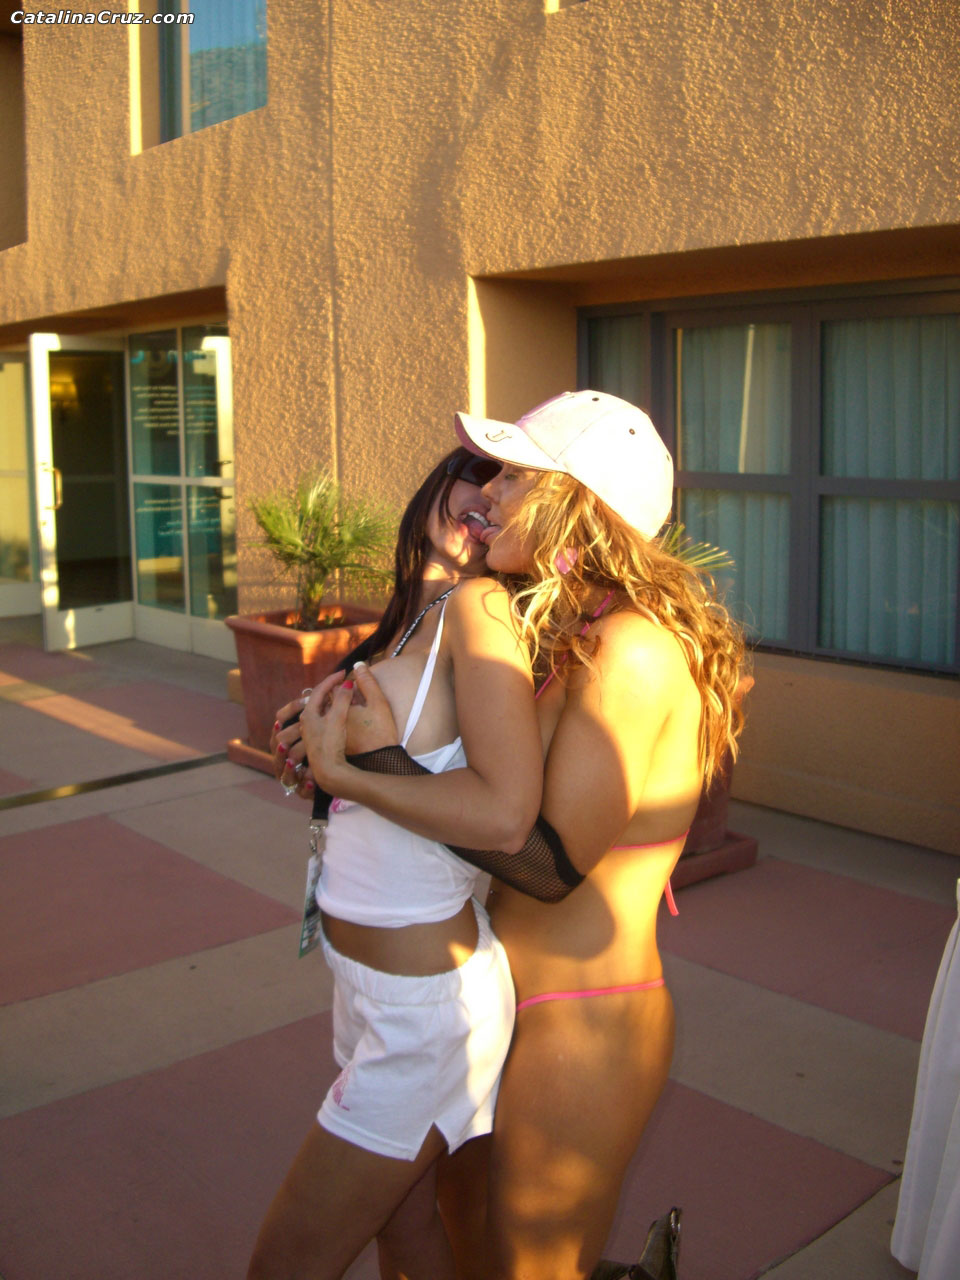 Hot pornstar Catalina Cruz poses with her friends & flashes her tits in public foto porno #425104896